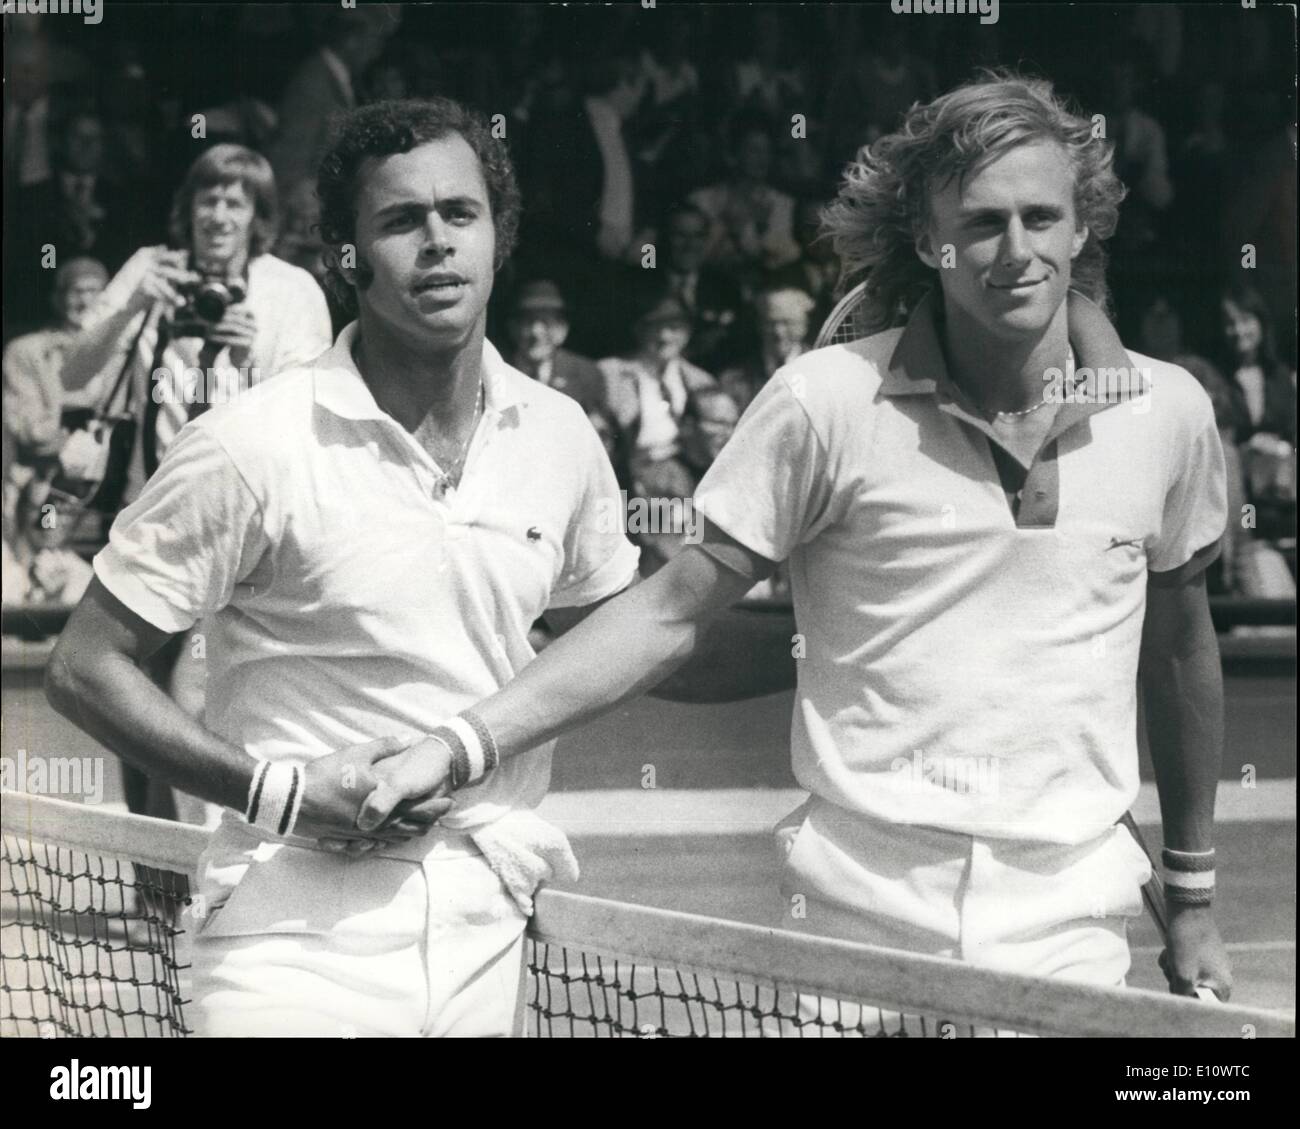 Jul. 07, 1974 - Tennis at Wimbledon, Bjorn Borg Beaten: Bjorn Borg, the  young Swedish tennis star was beaten in the men' s singles at Wimbledon by  Ishamil El Shafei (United Arab